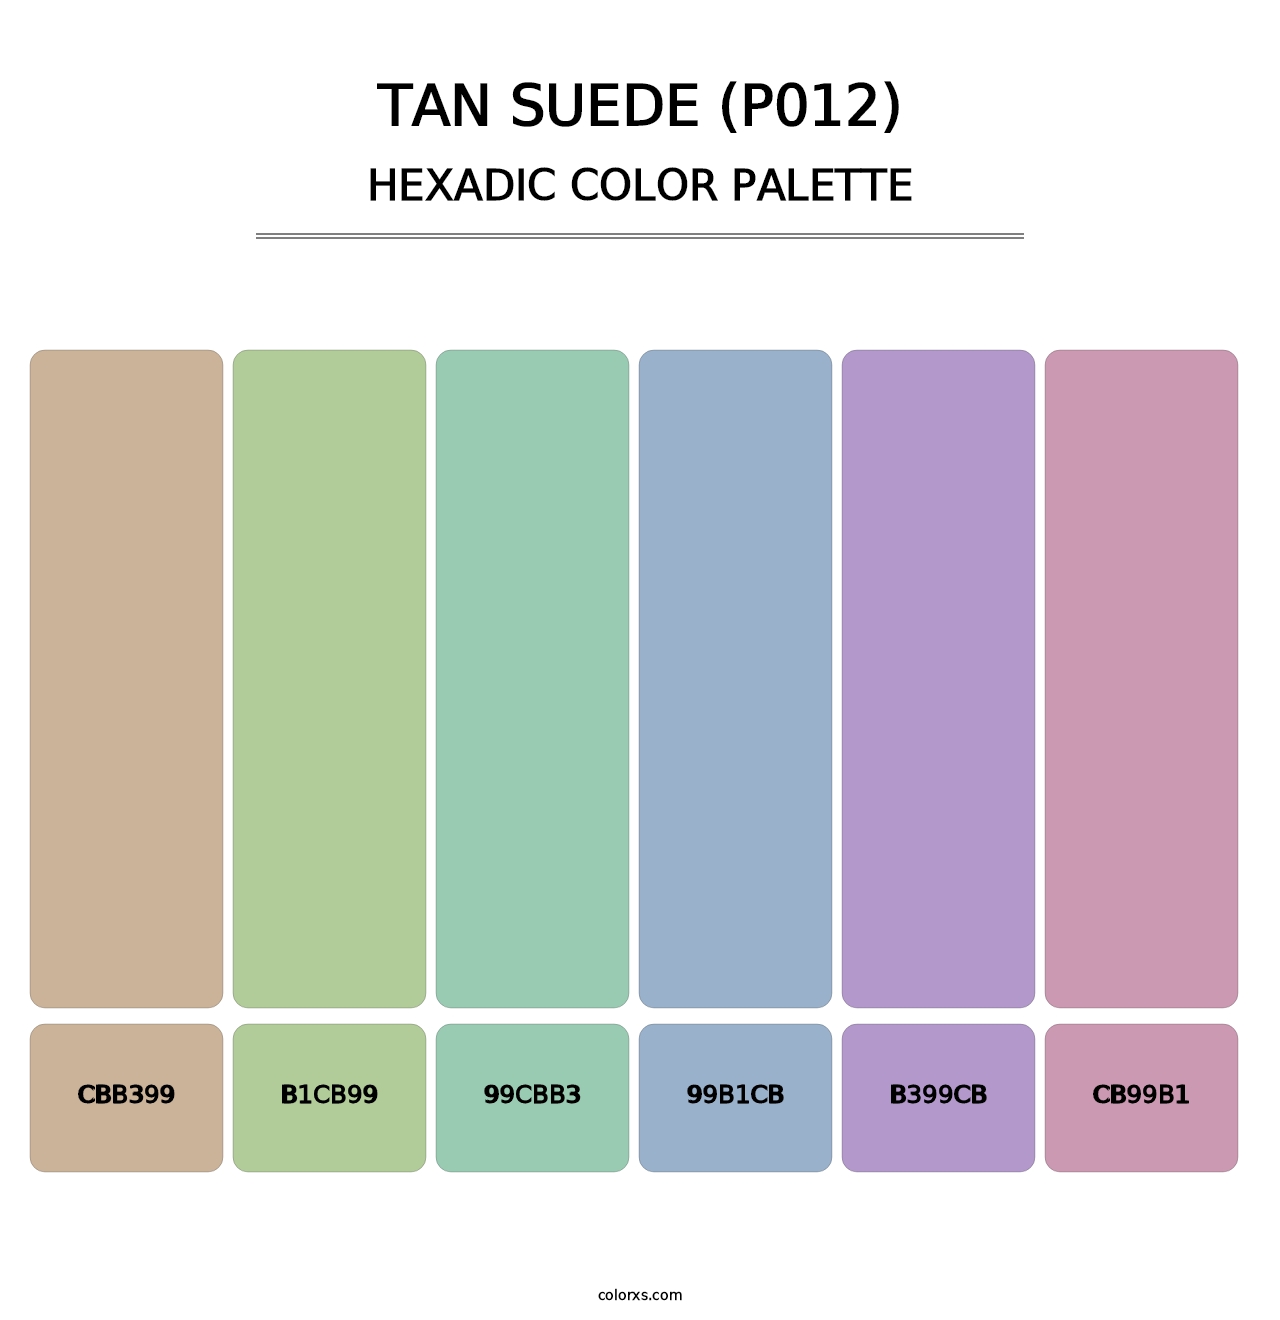 Tan Suede (P012) - Hexadic Color Palette